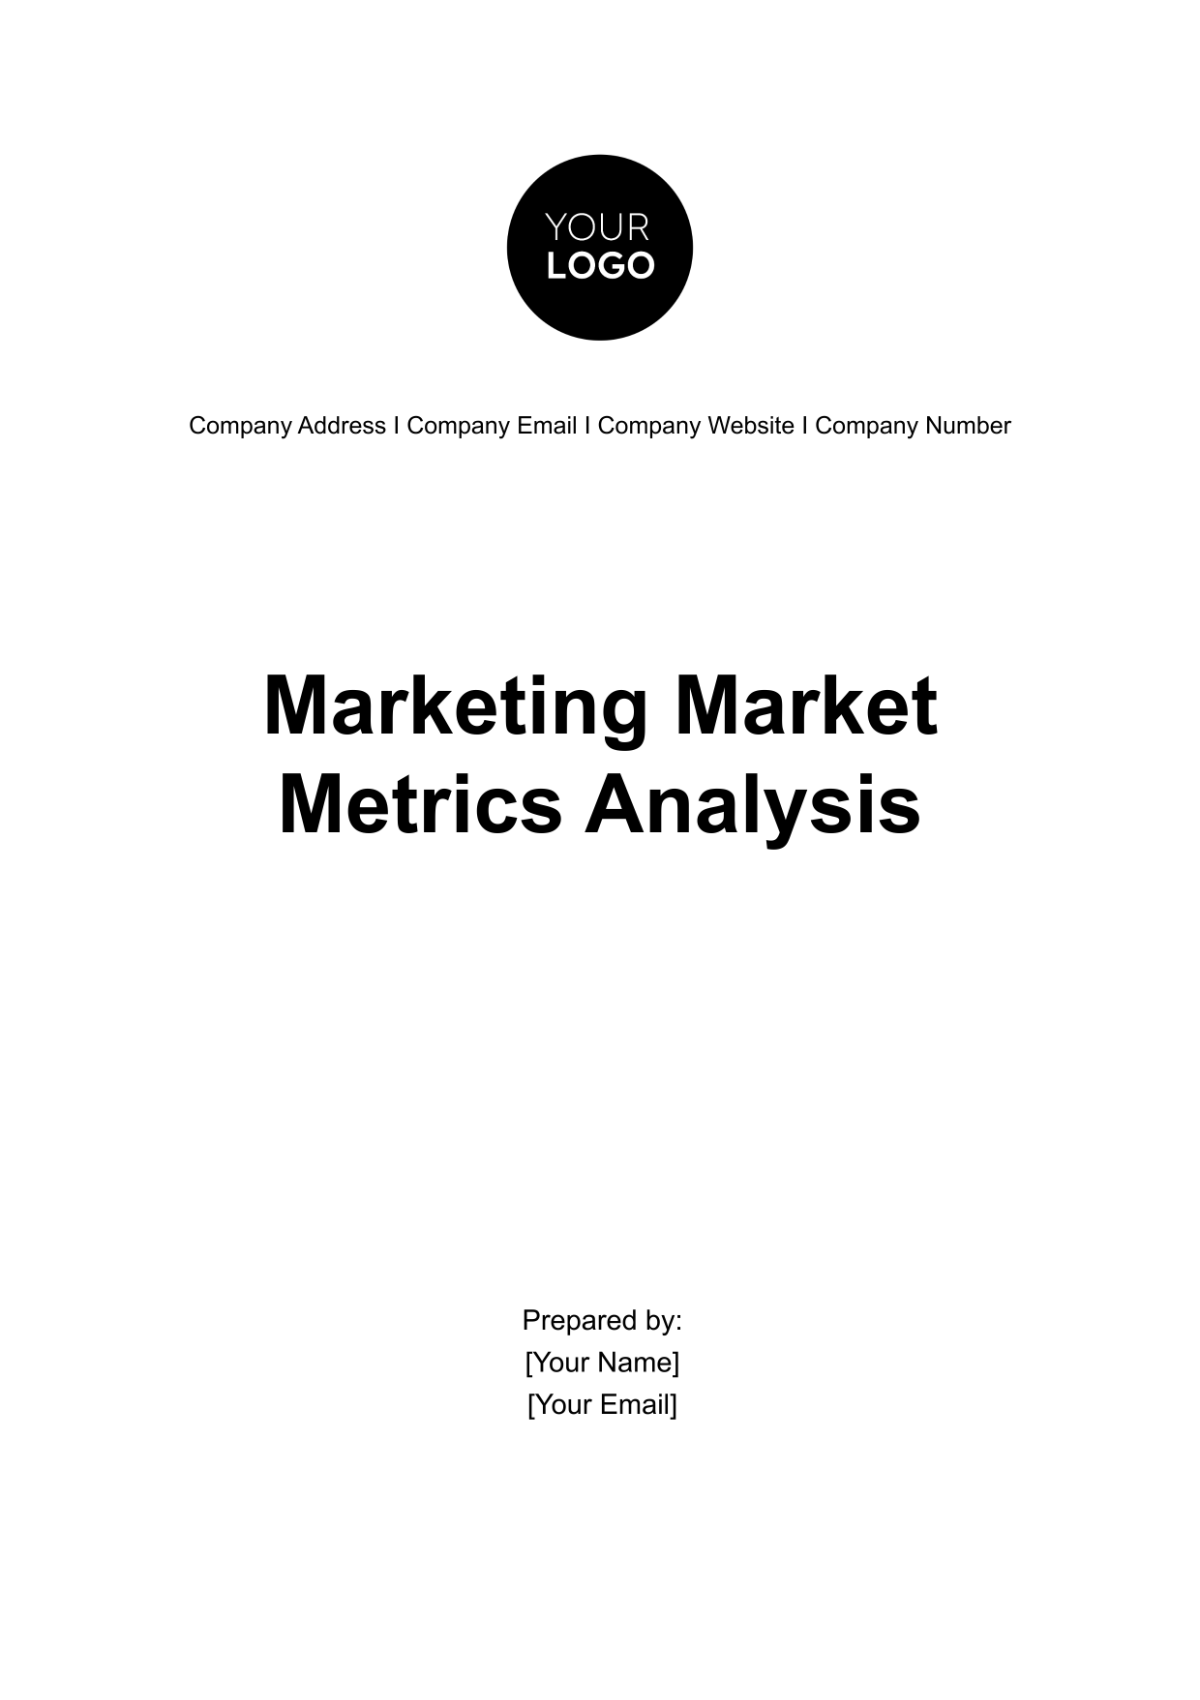 Marketing Market Metrics Analysis Template